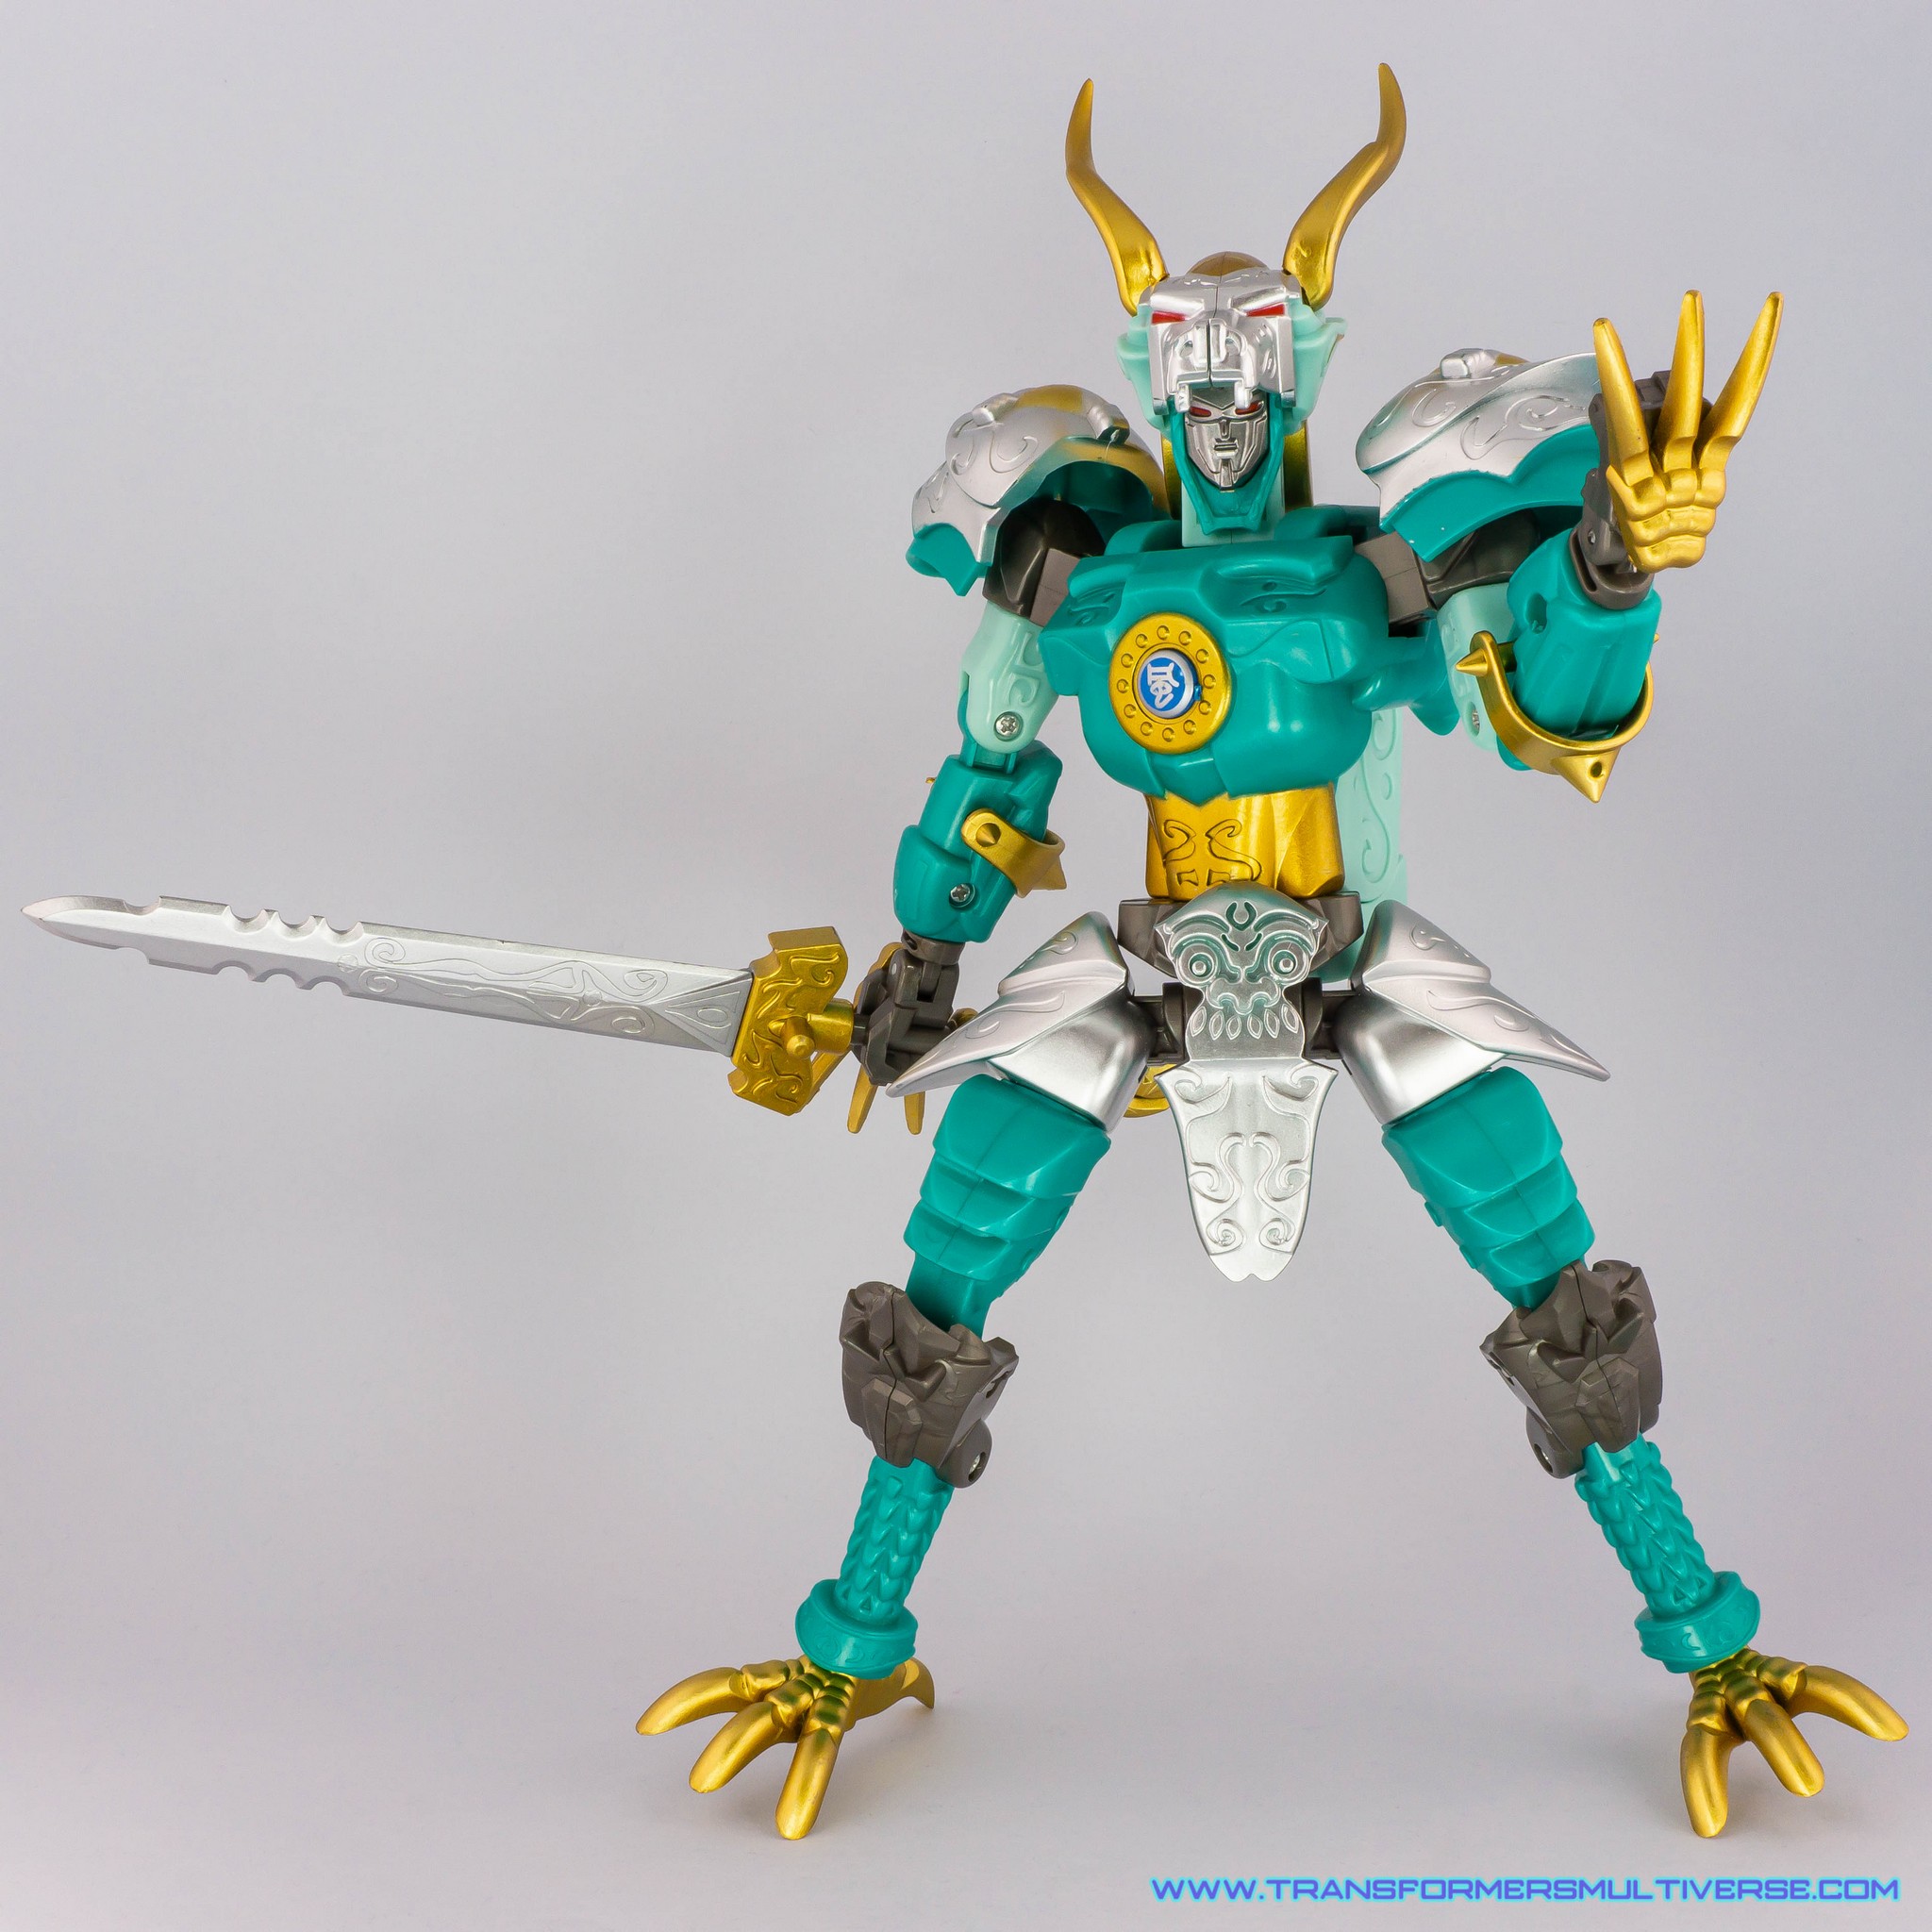 Machine Boy dragon robot alternate pose with sword